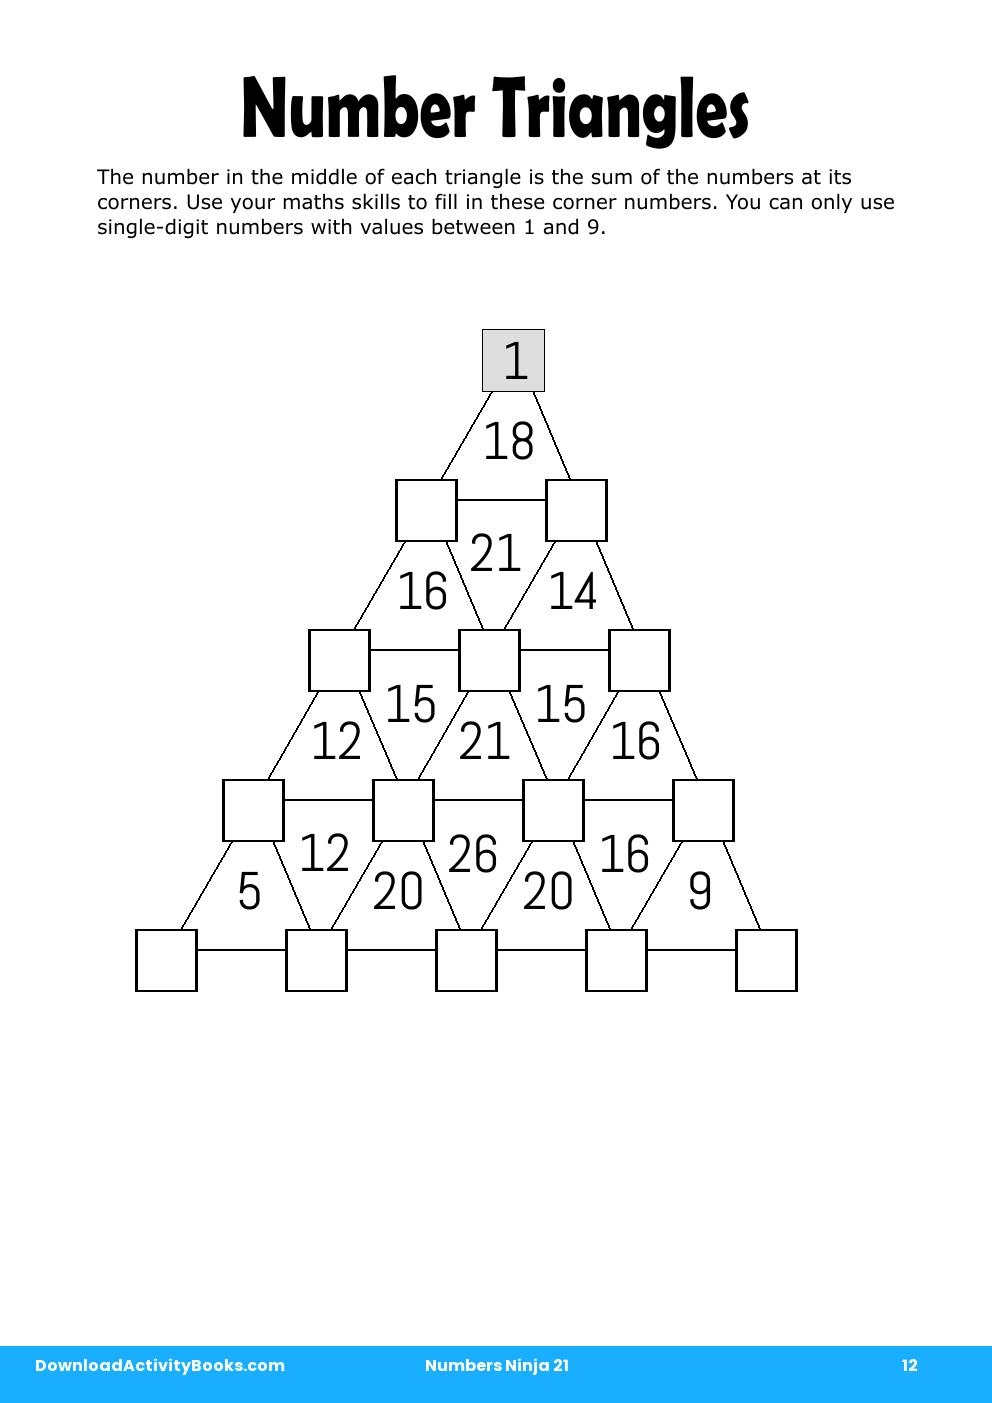 Number Triangles in Numbers Ninja 21